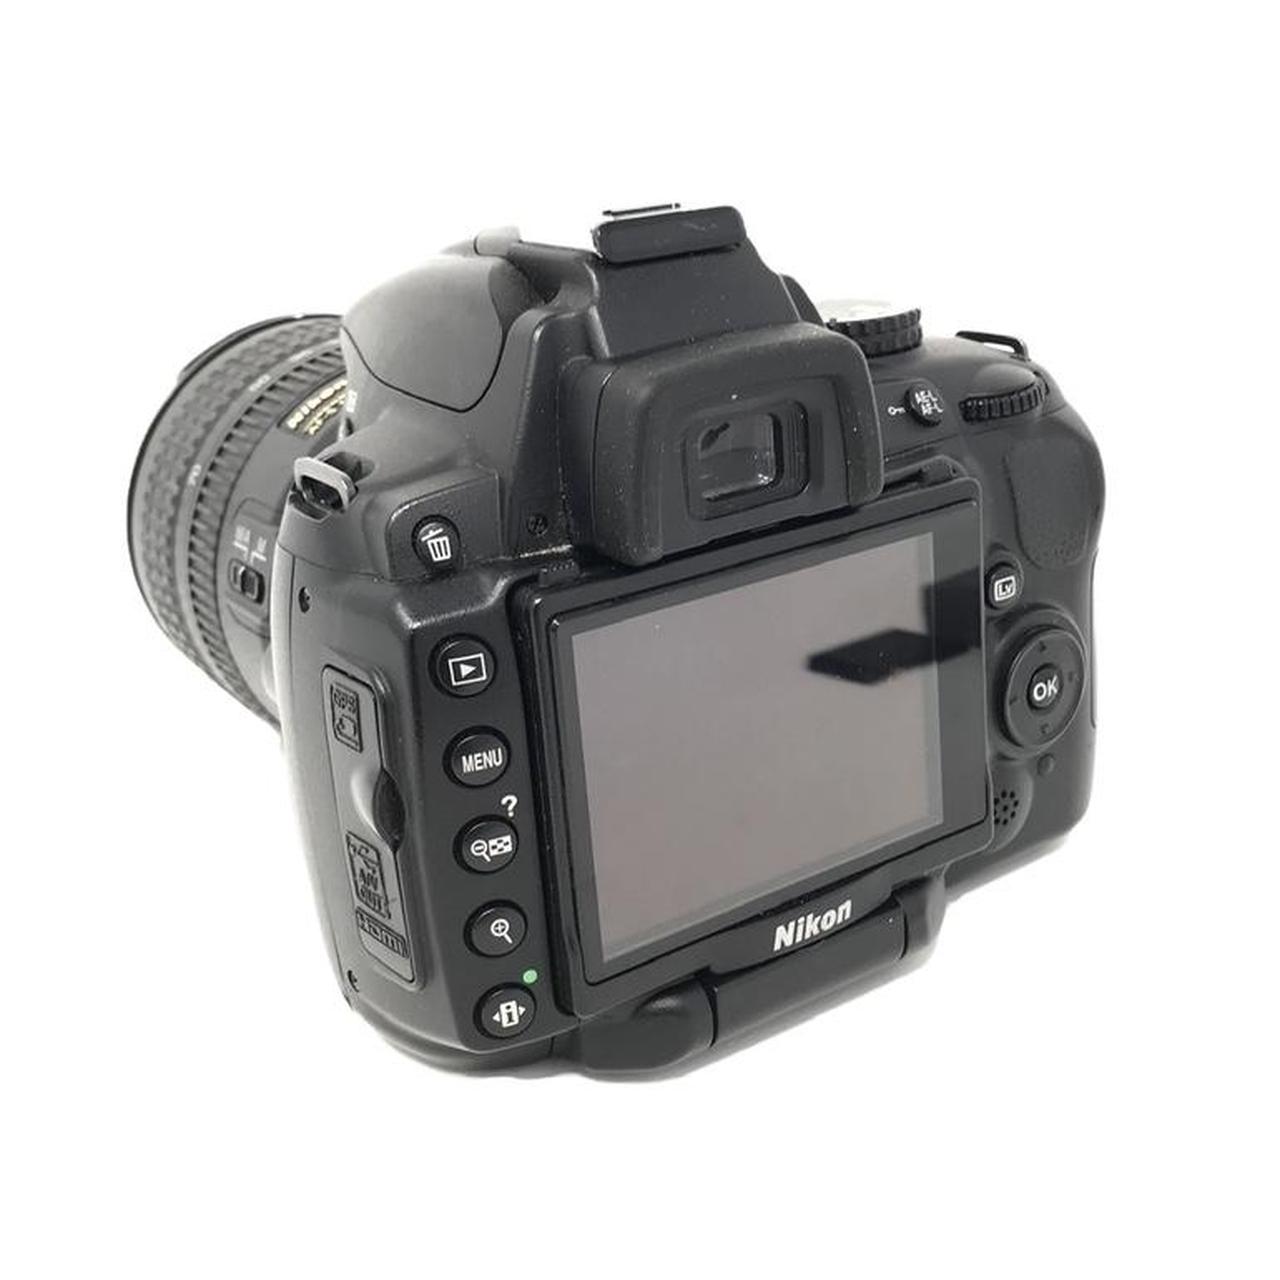 Product Image 4 - Nikon D5000 Digital Camera DSLR

Comes